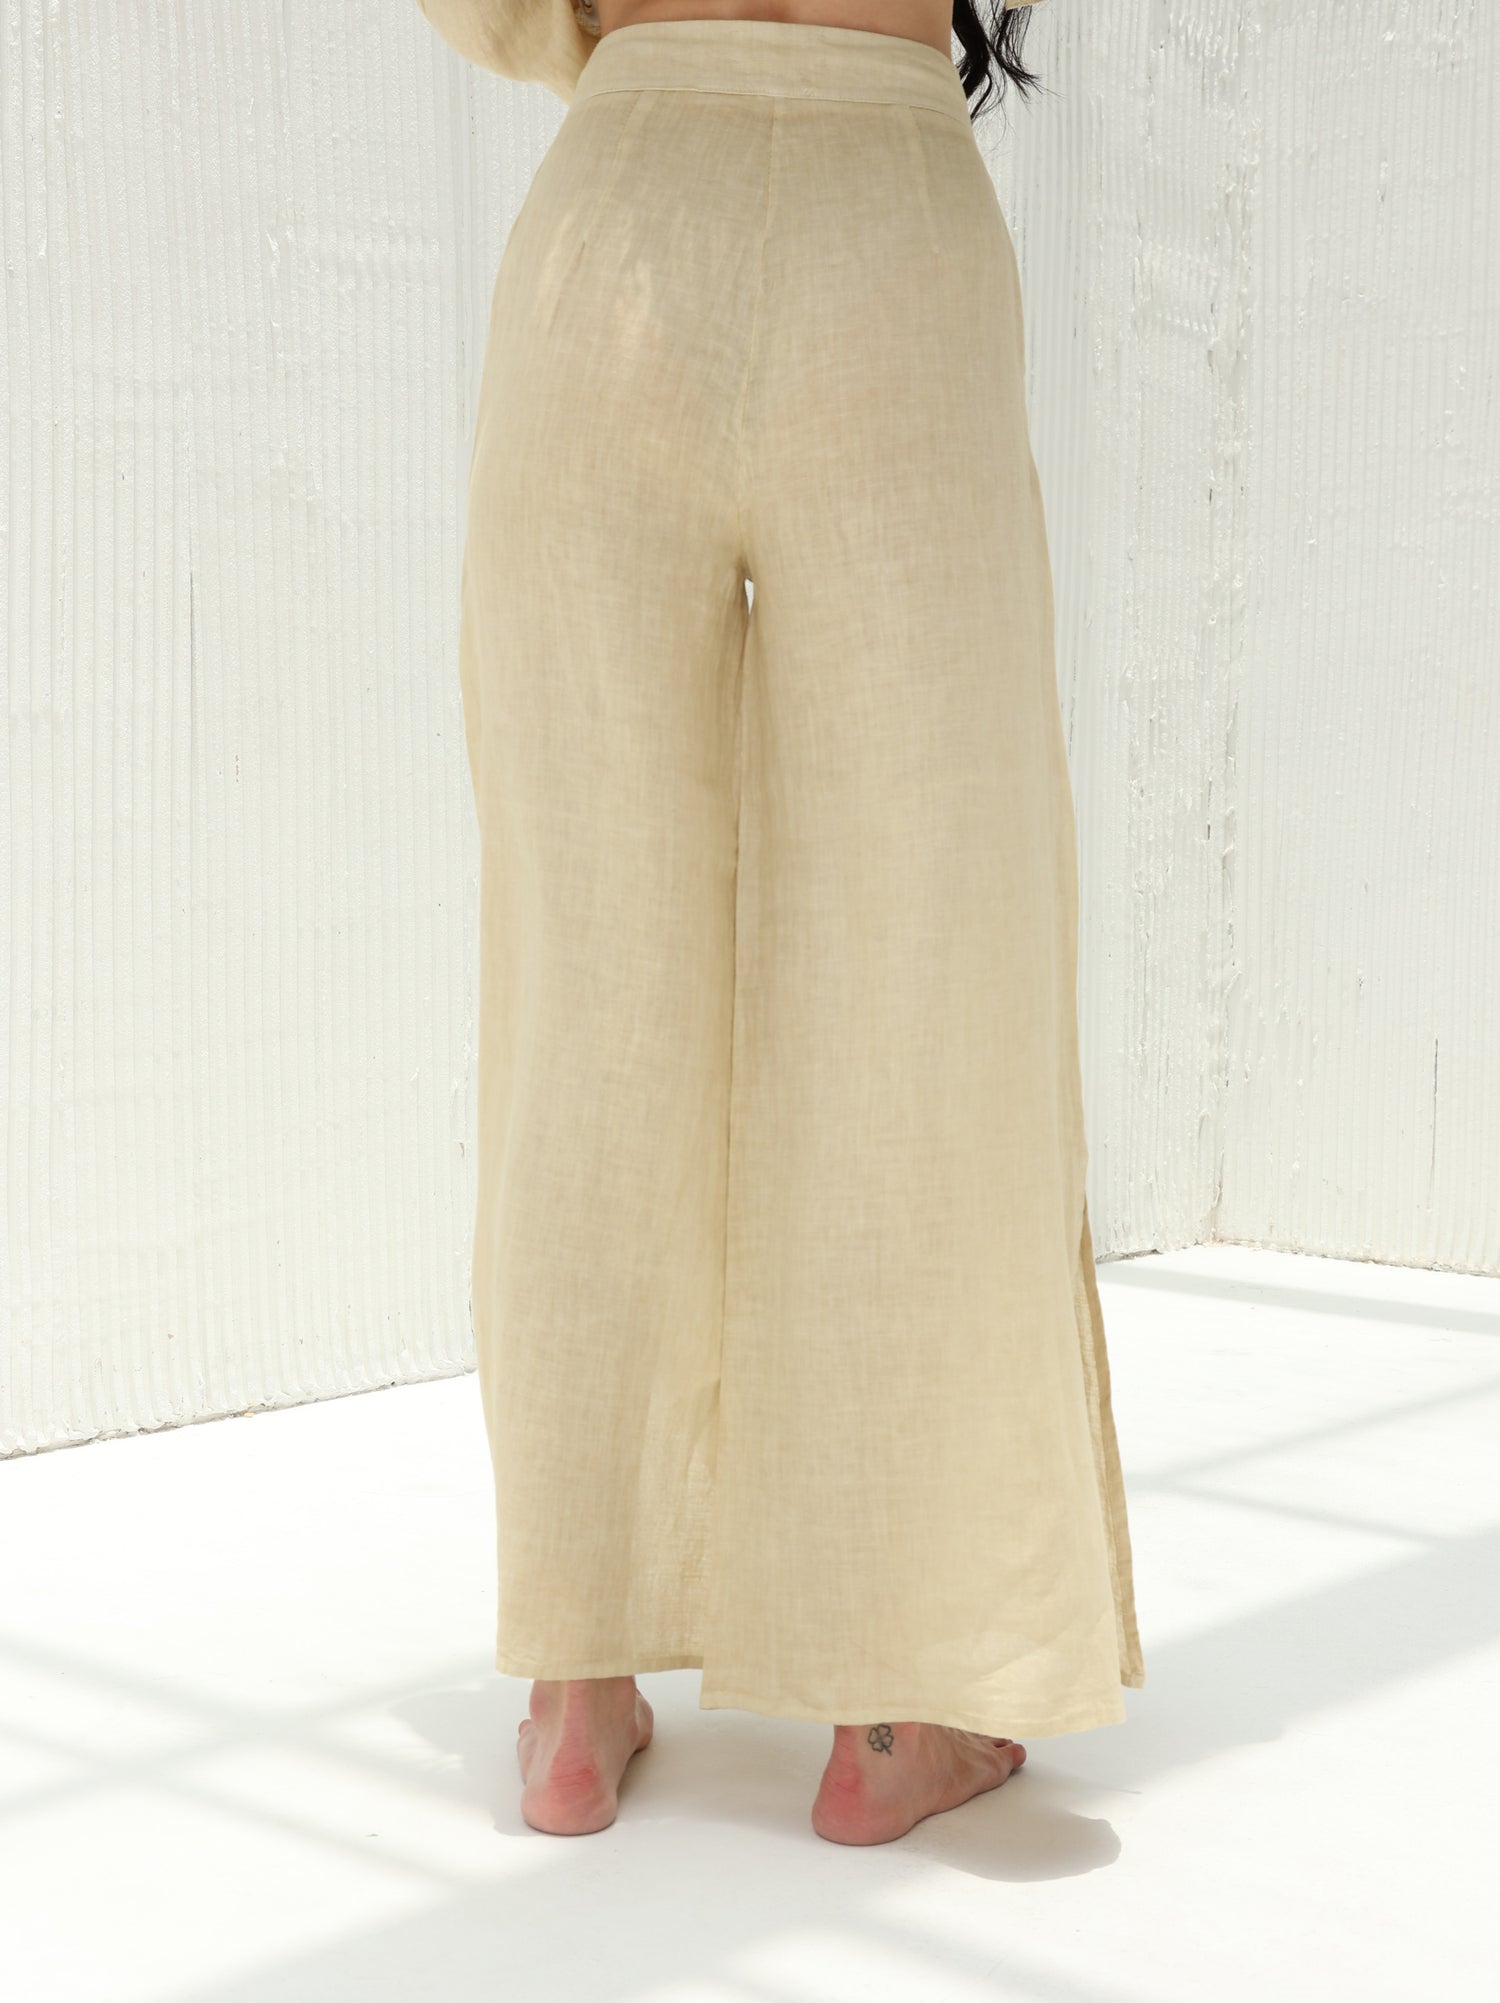  Sofia Pure Linen Side-Slit Pants From G Linen - Hay - Back shot